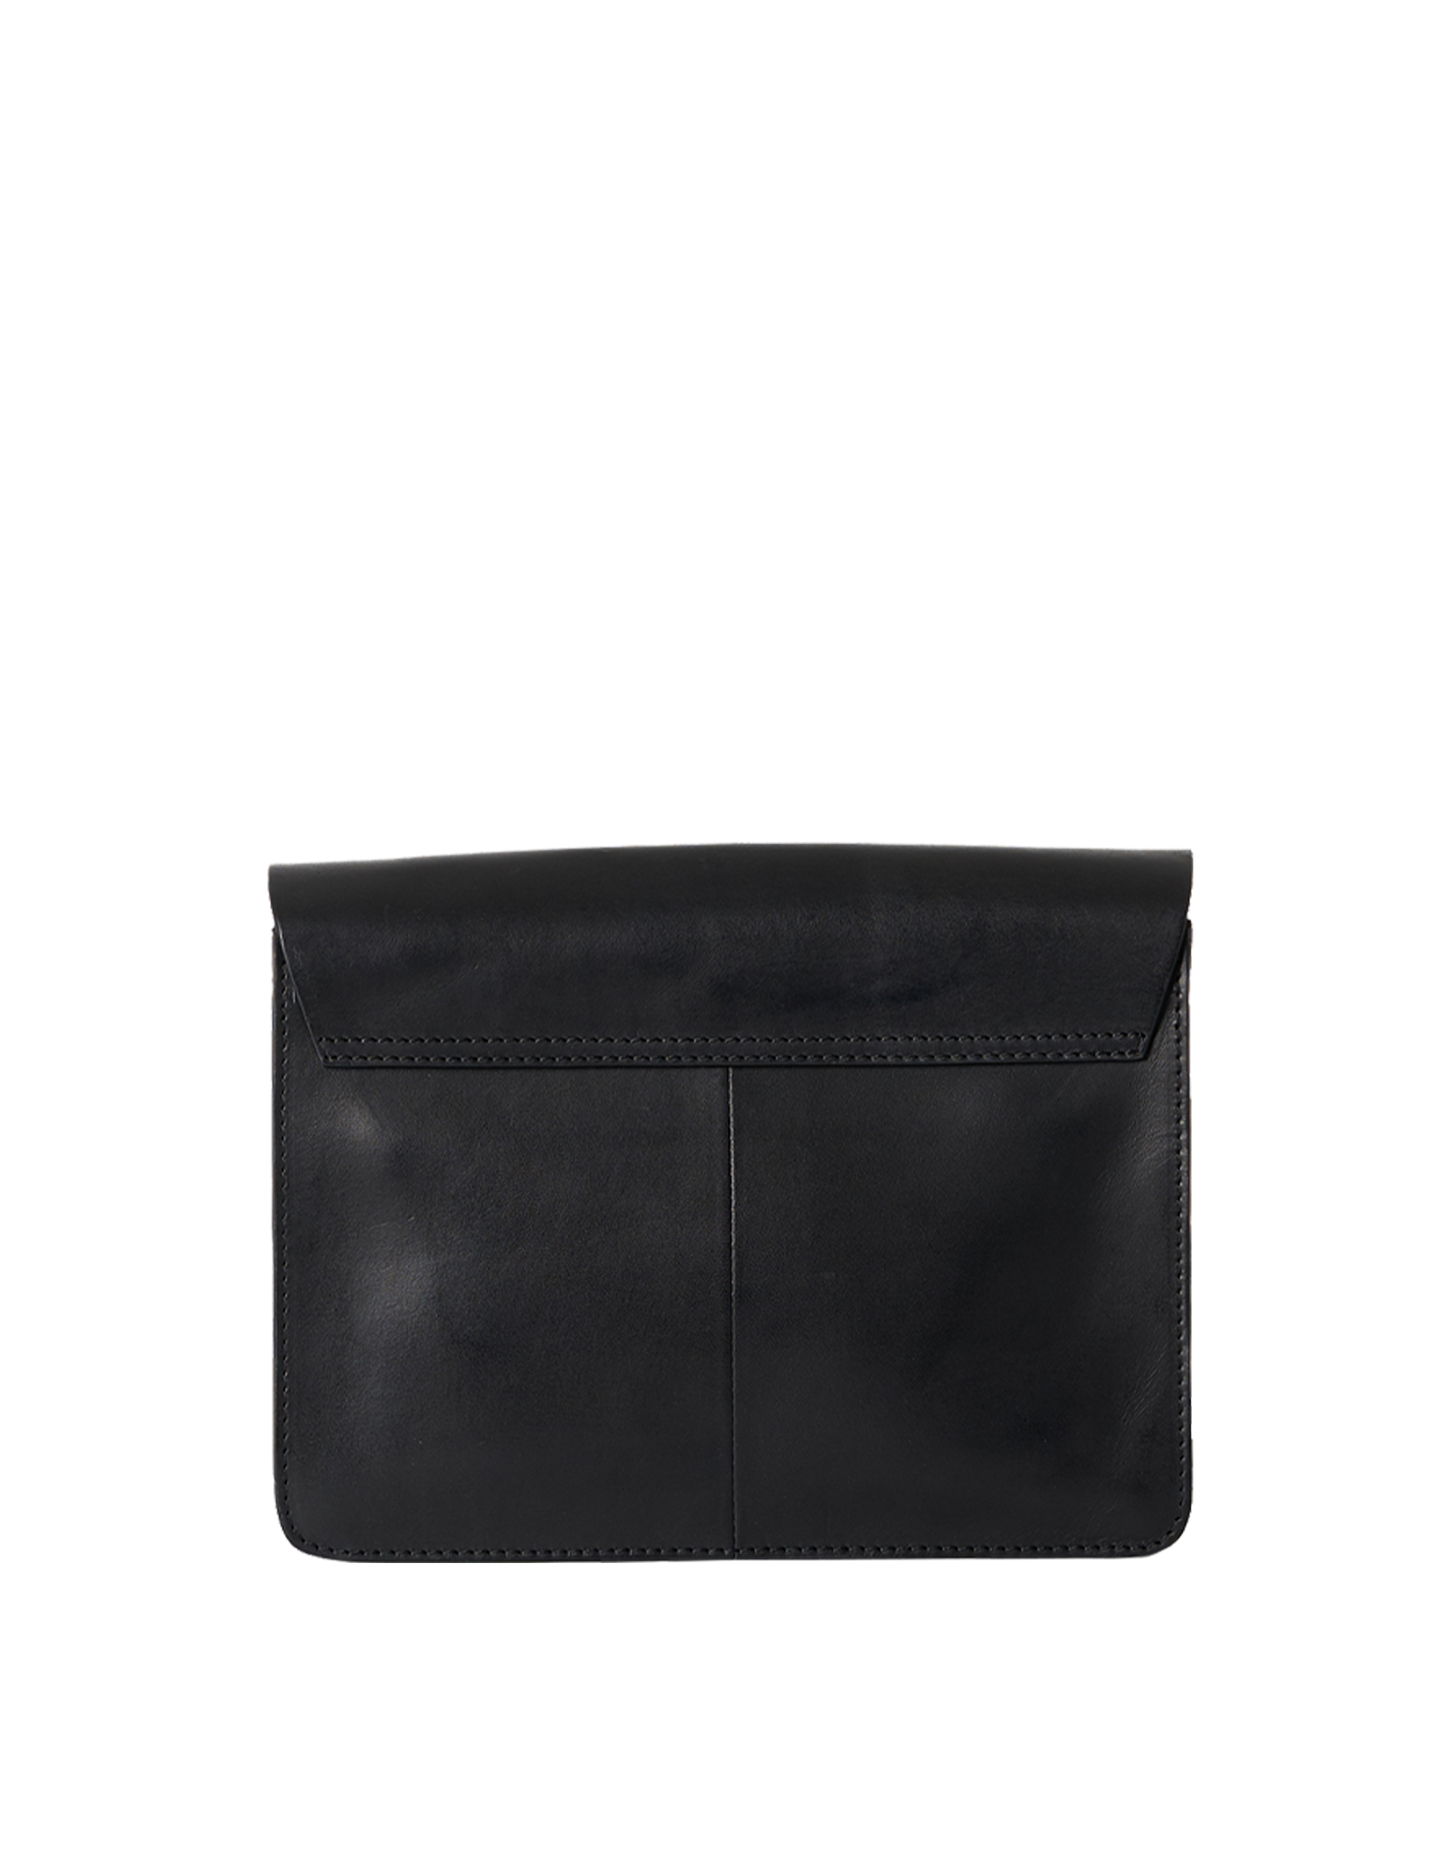 Audrey Mini Black Classic Leather